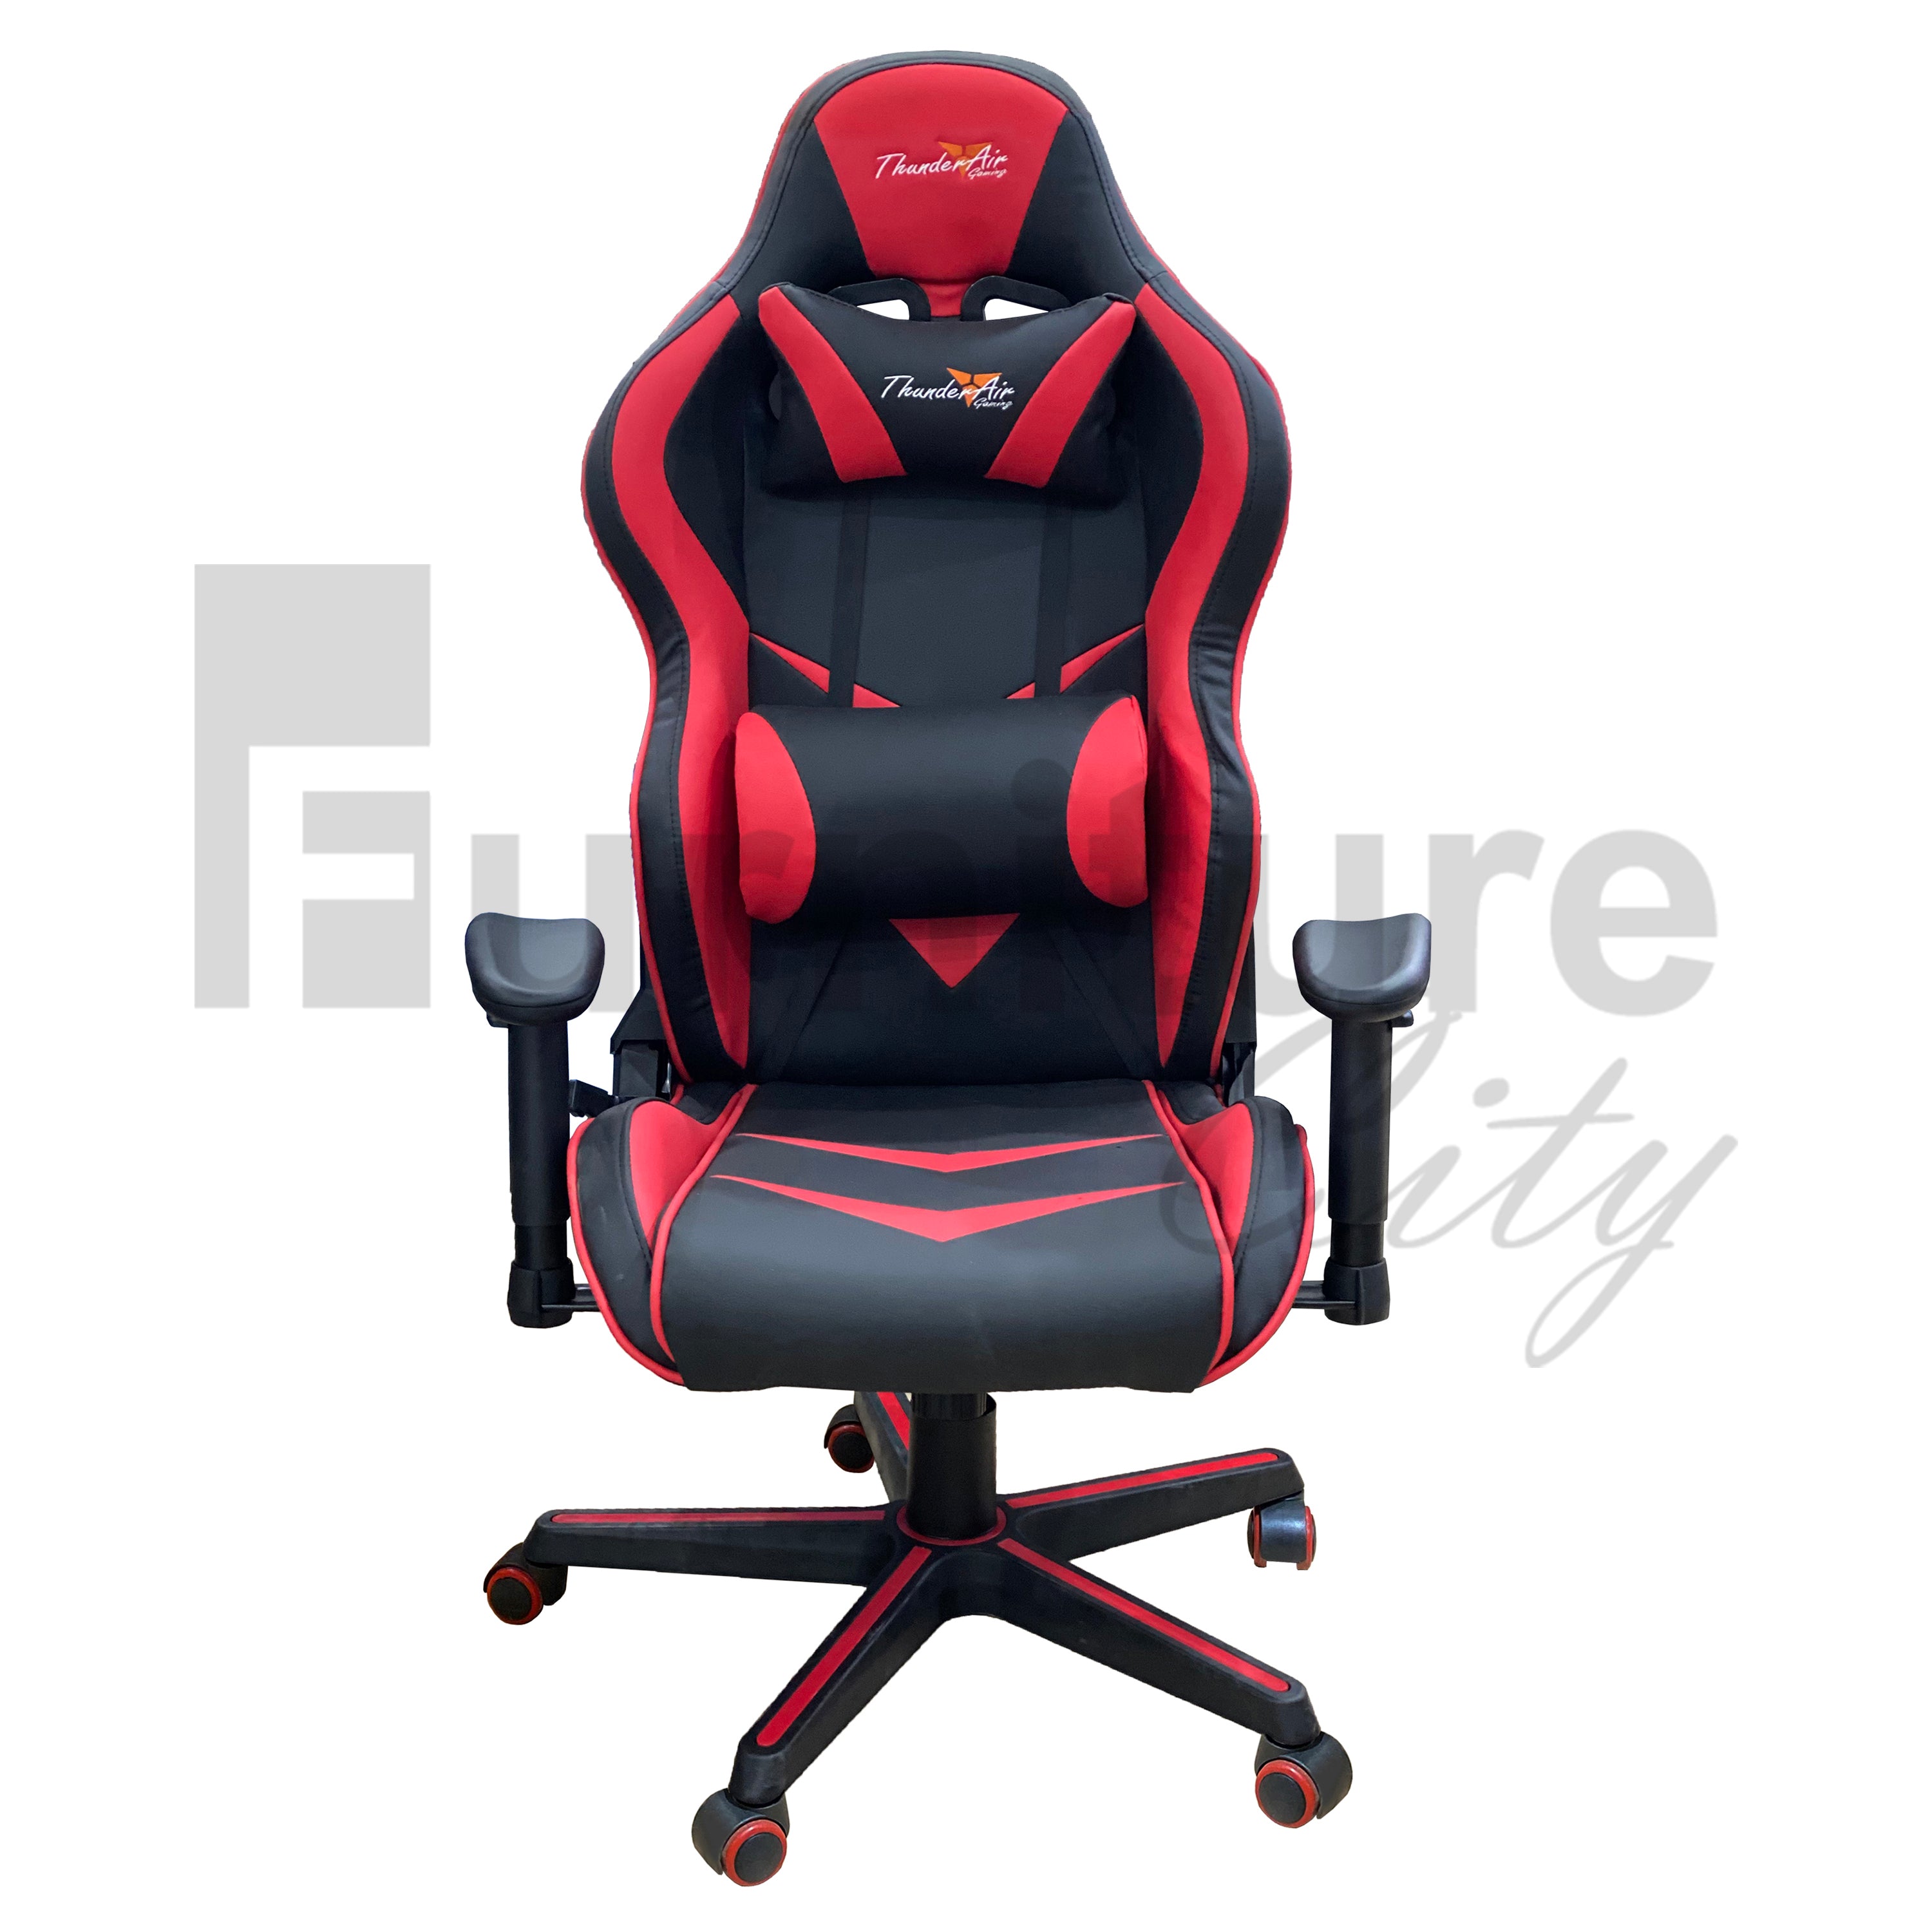 Thunder Air Gaming Chair - Red